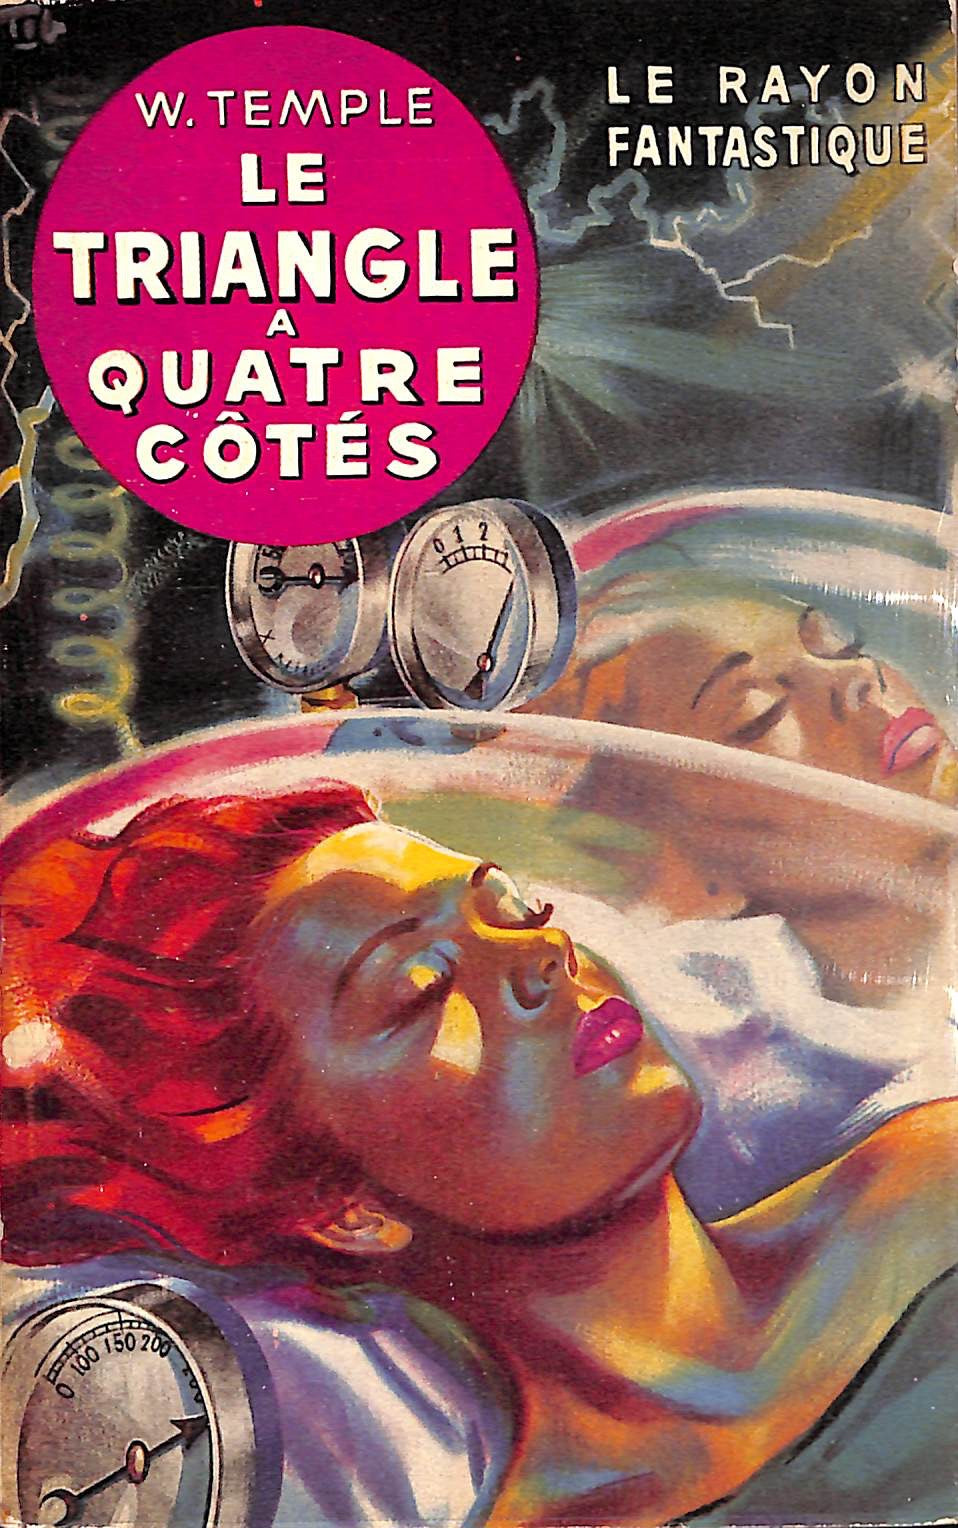 "Le Triangle A Quatre Cotes" 1952 TEMPLE, W.